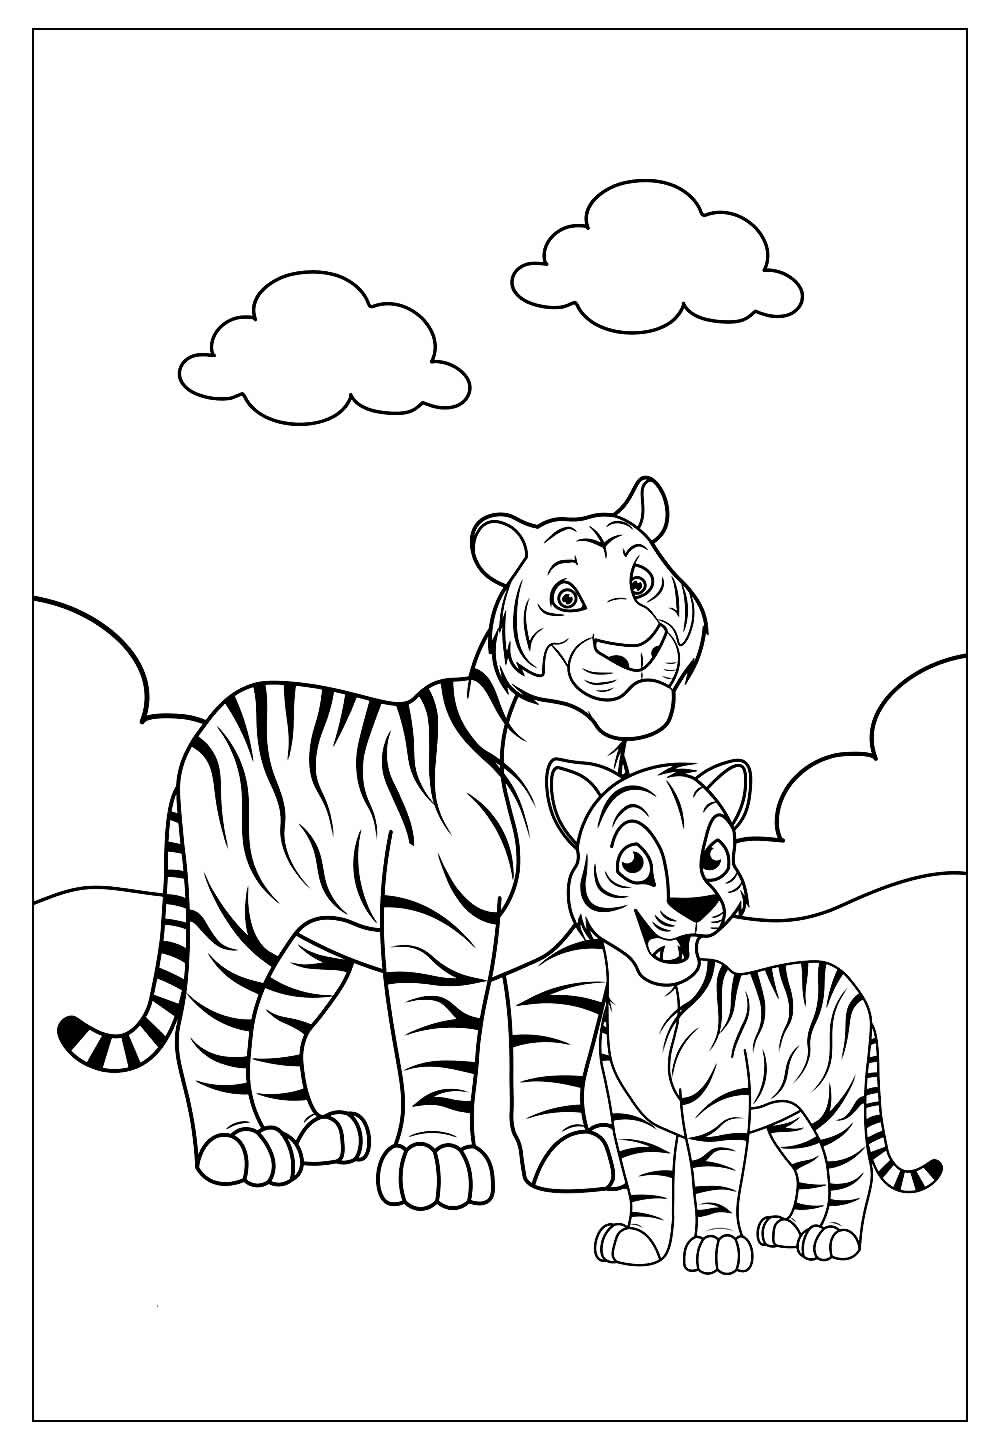 Desenho de Tigres para colorir